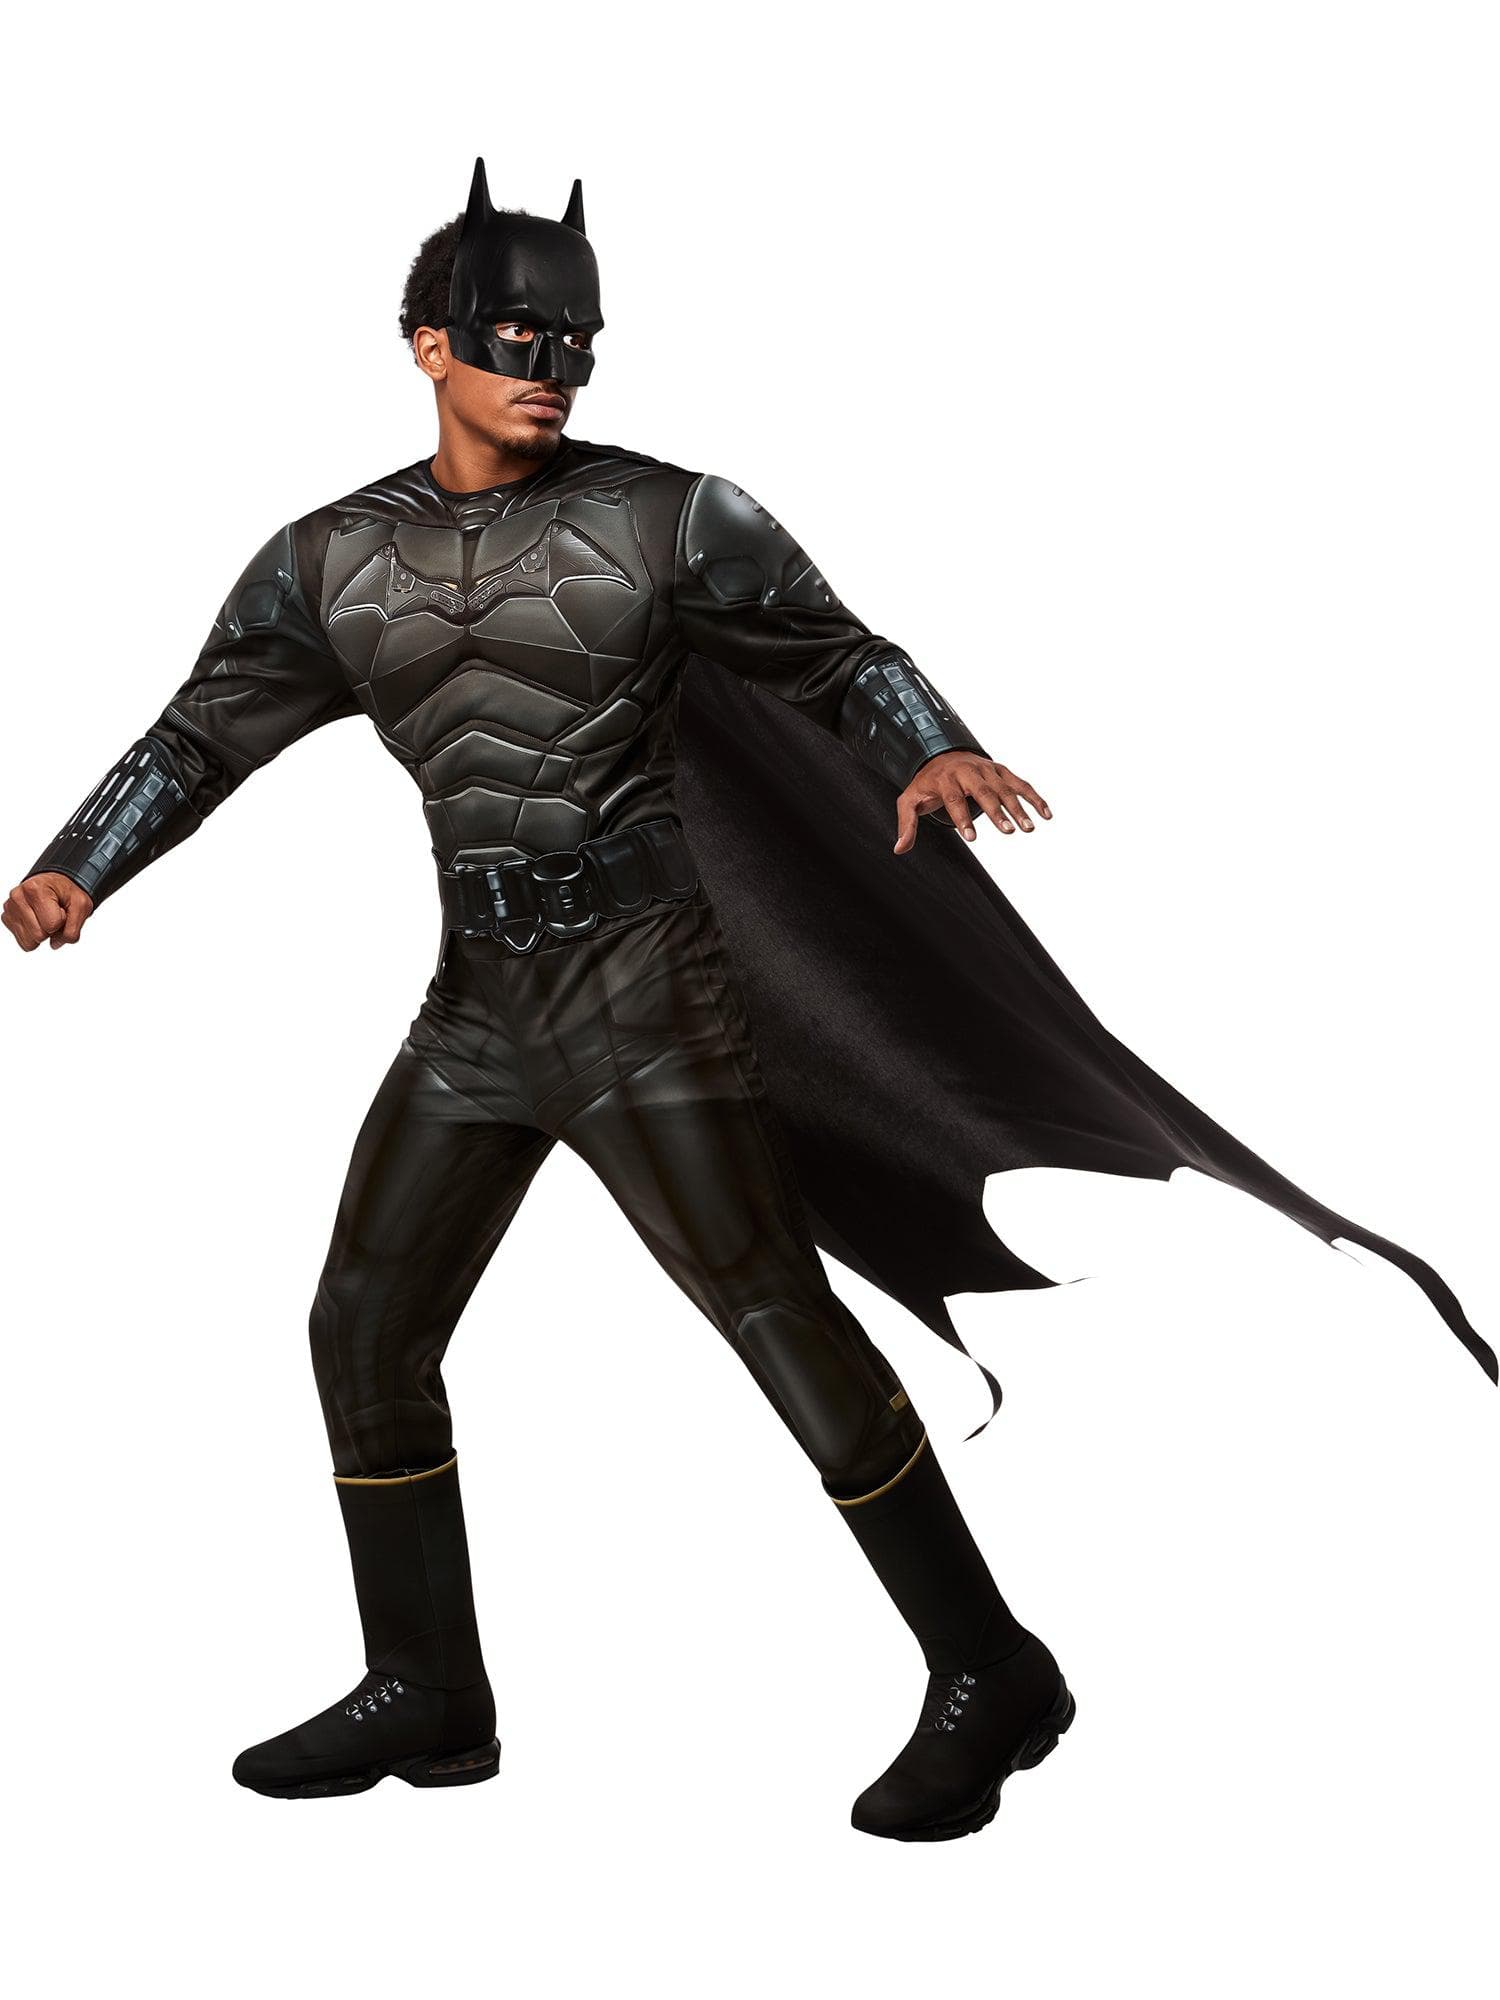 The Batman Adult Deluxe Costume - costumes.com